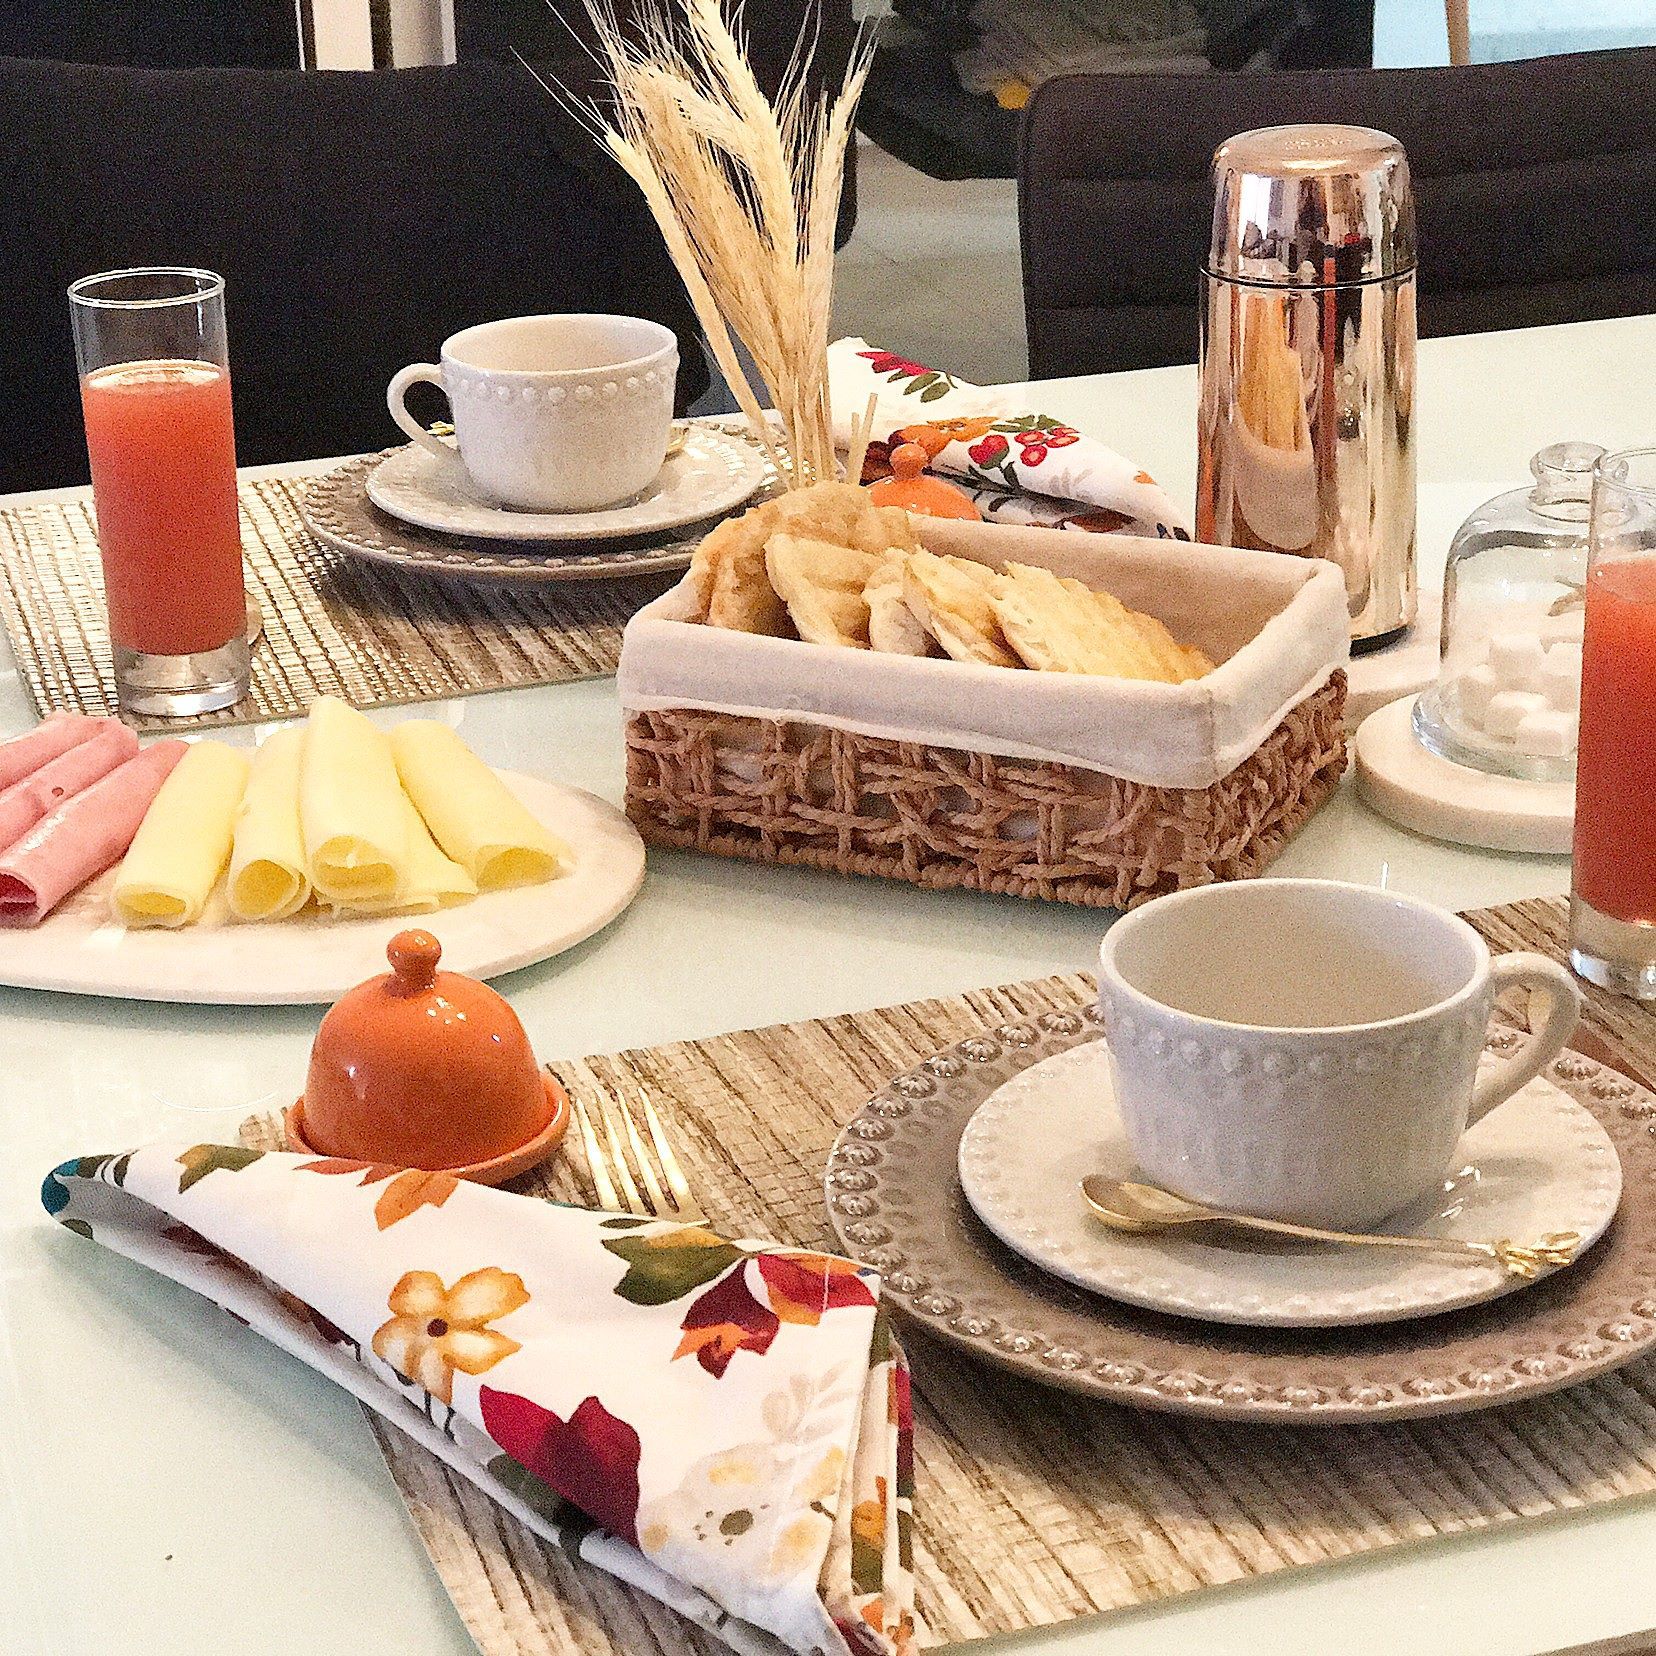 Сервировка стола для завтрака. Сервировка стола к завтраку. Красивая сервировка завтрака. Красивый завтрак. Завтрак на столе.